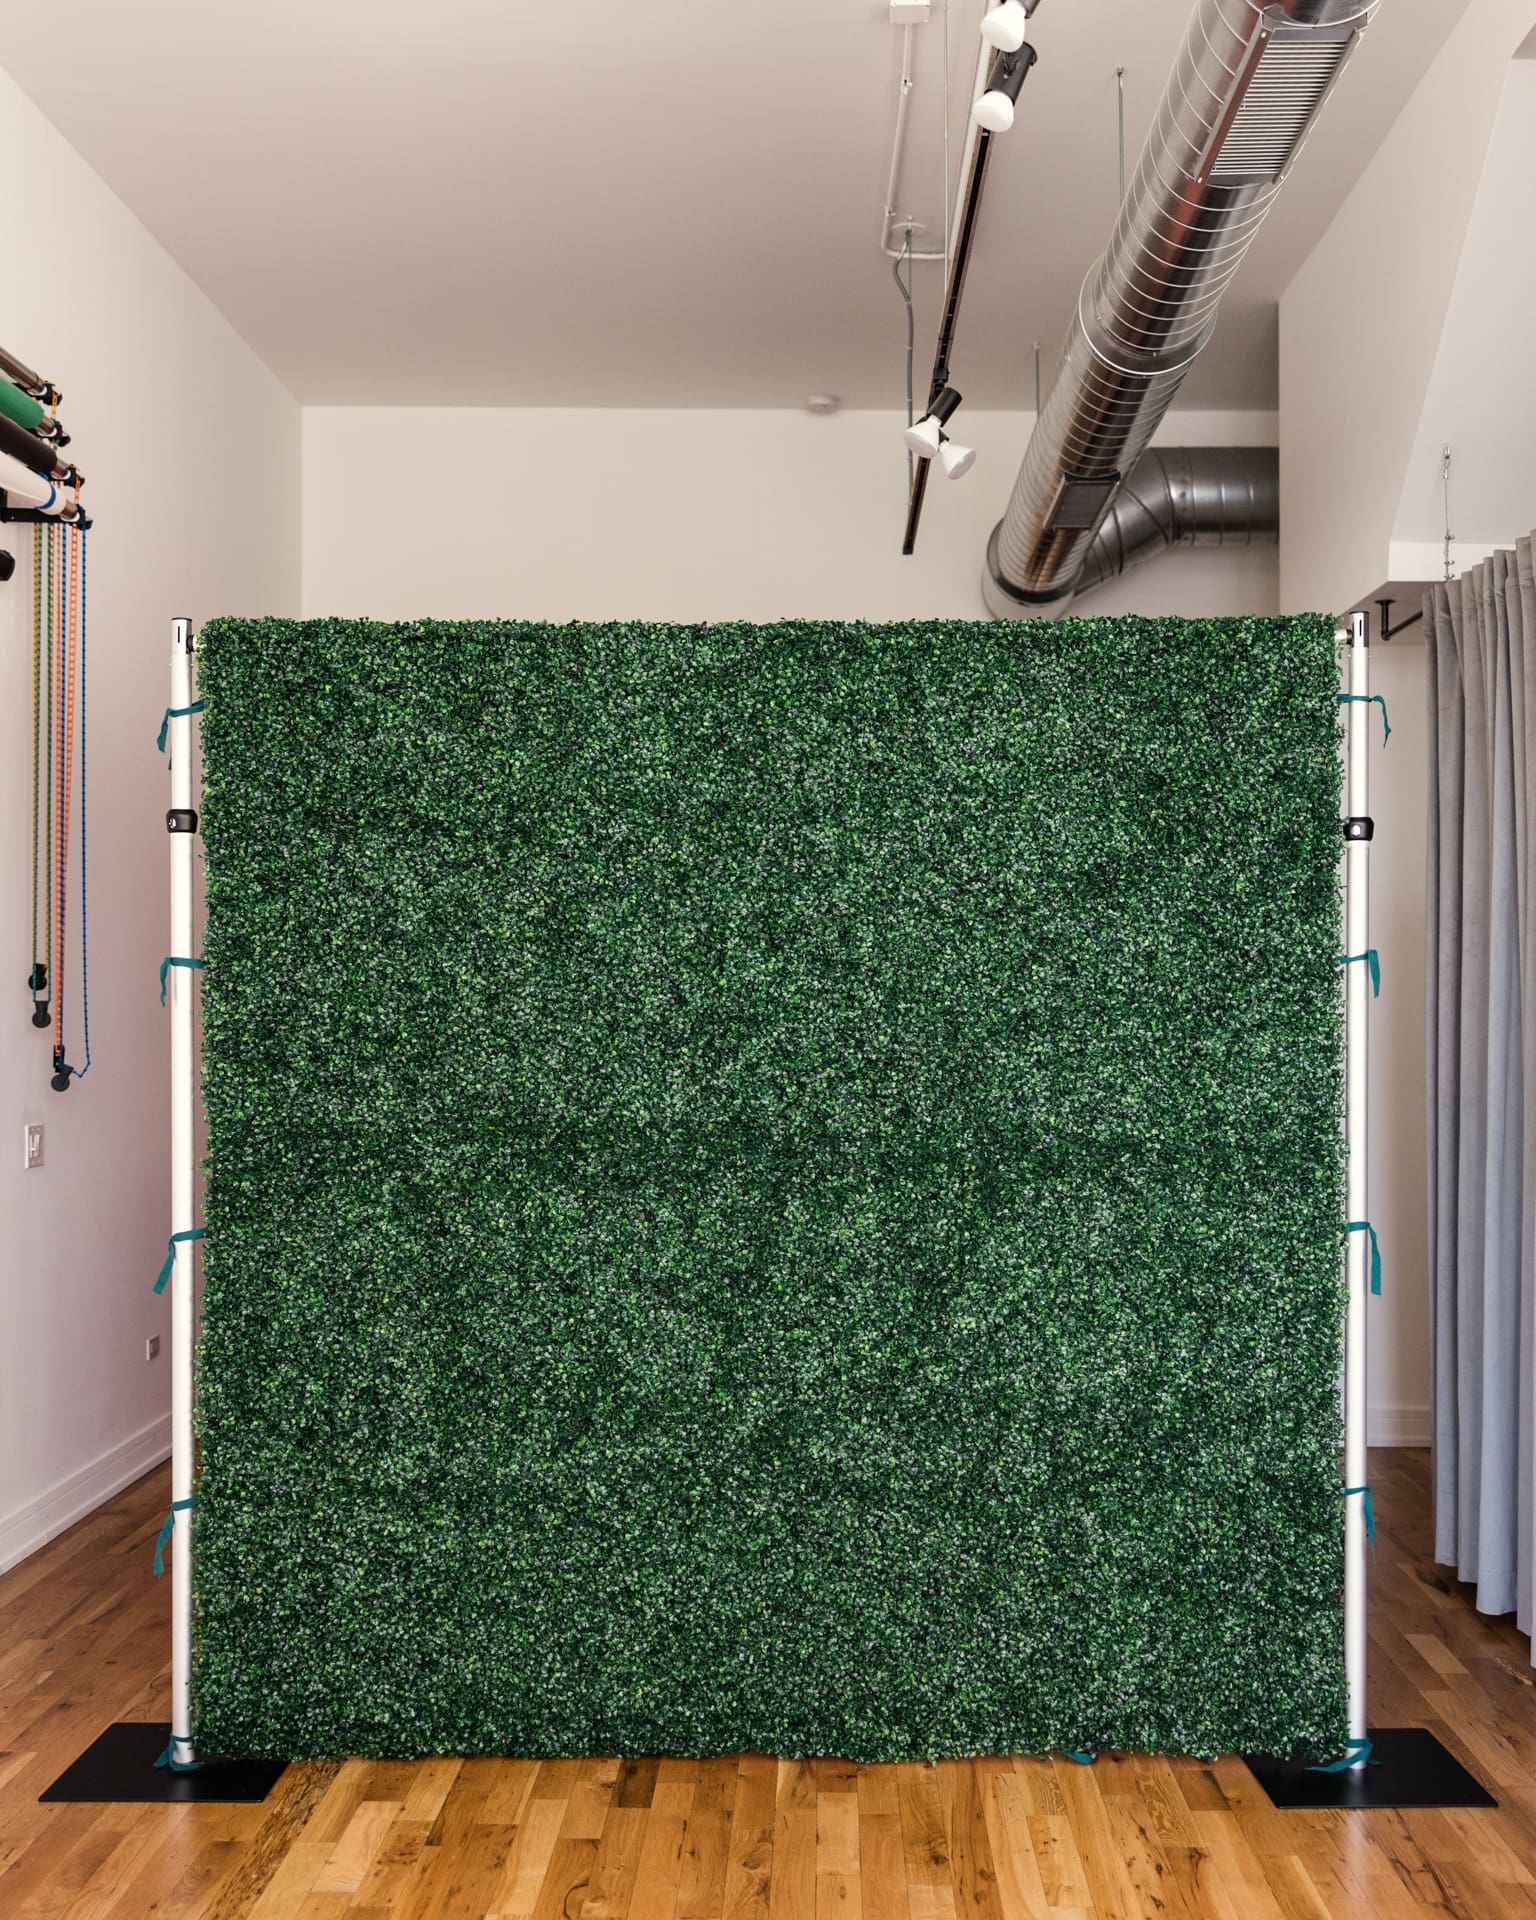 Boxwood greenery flower wall set up in Chicago photography studio P&M Studio